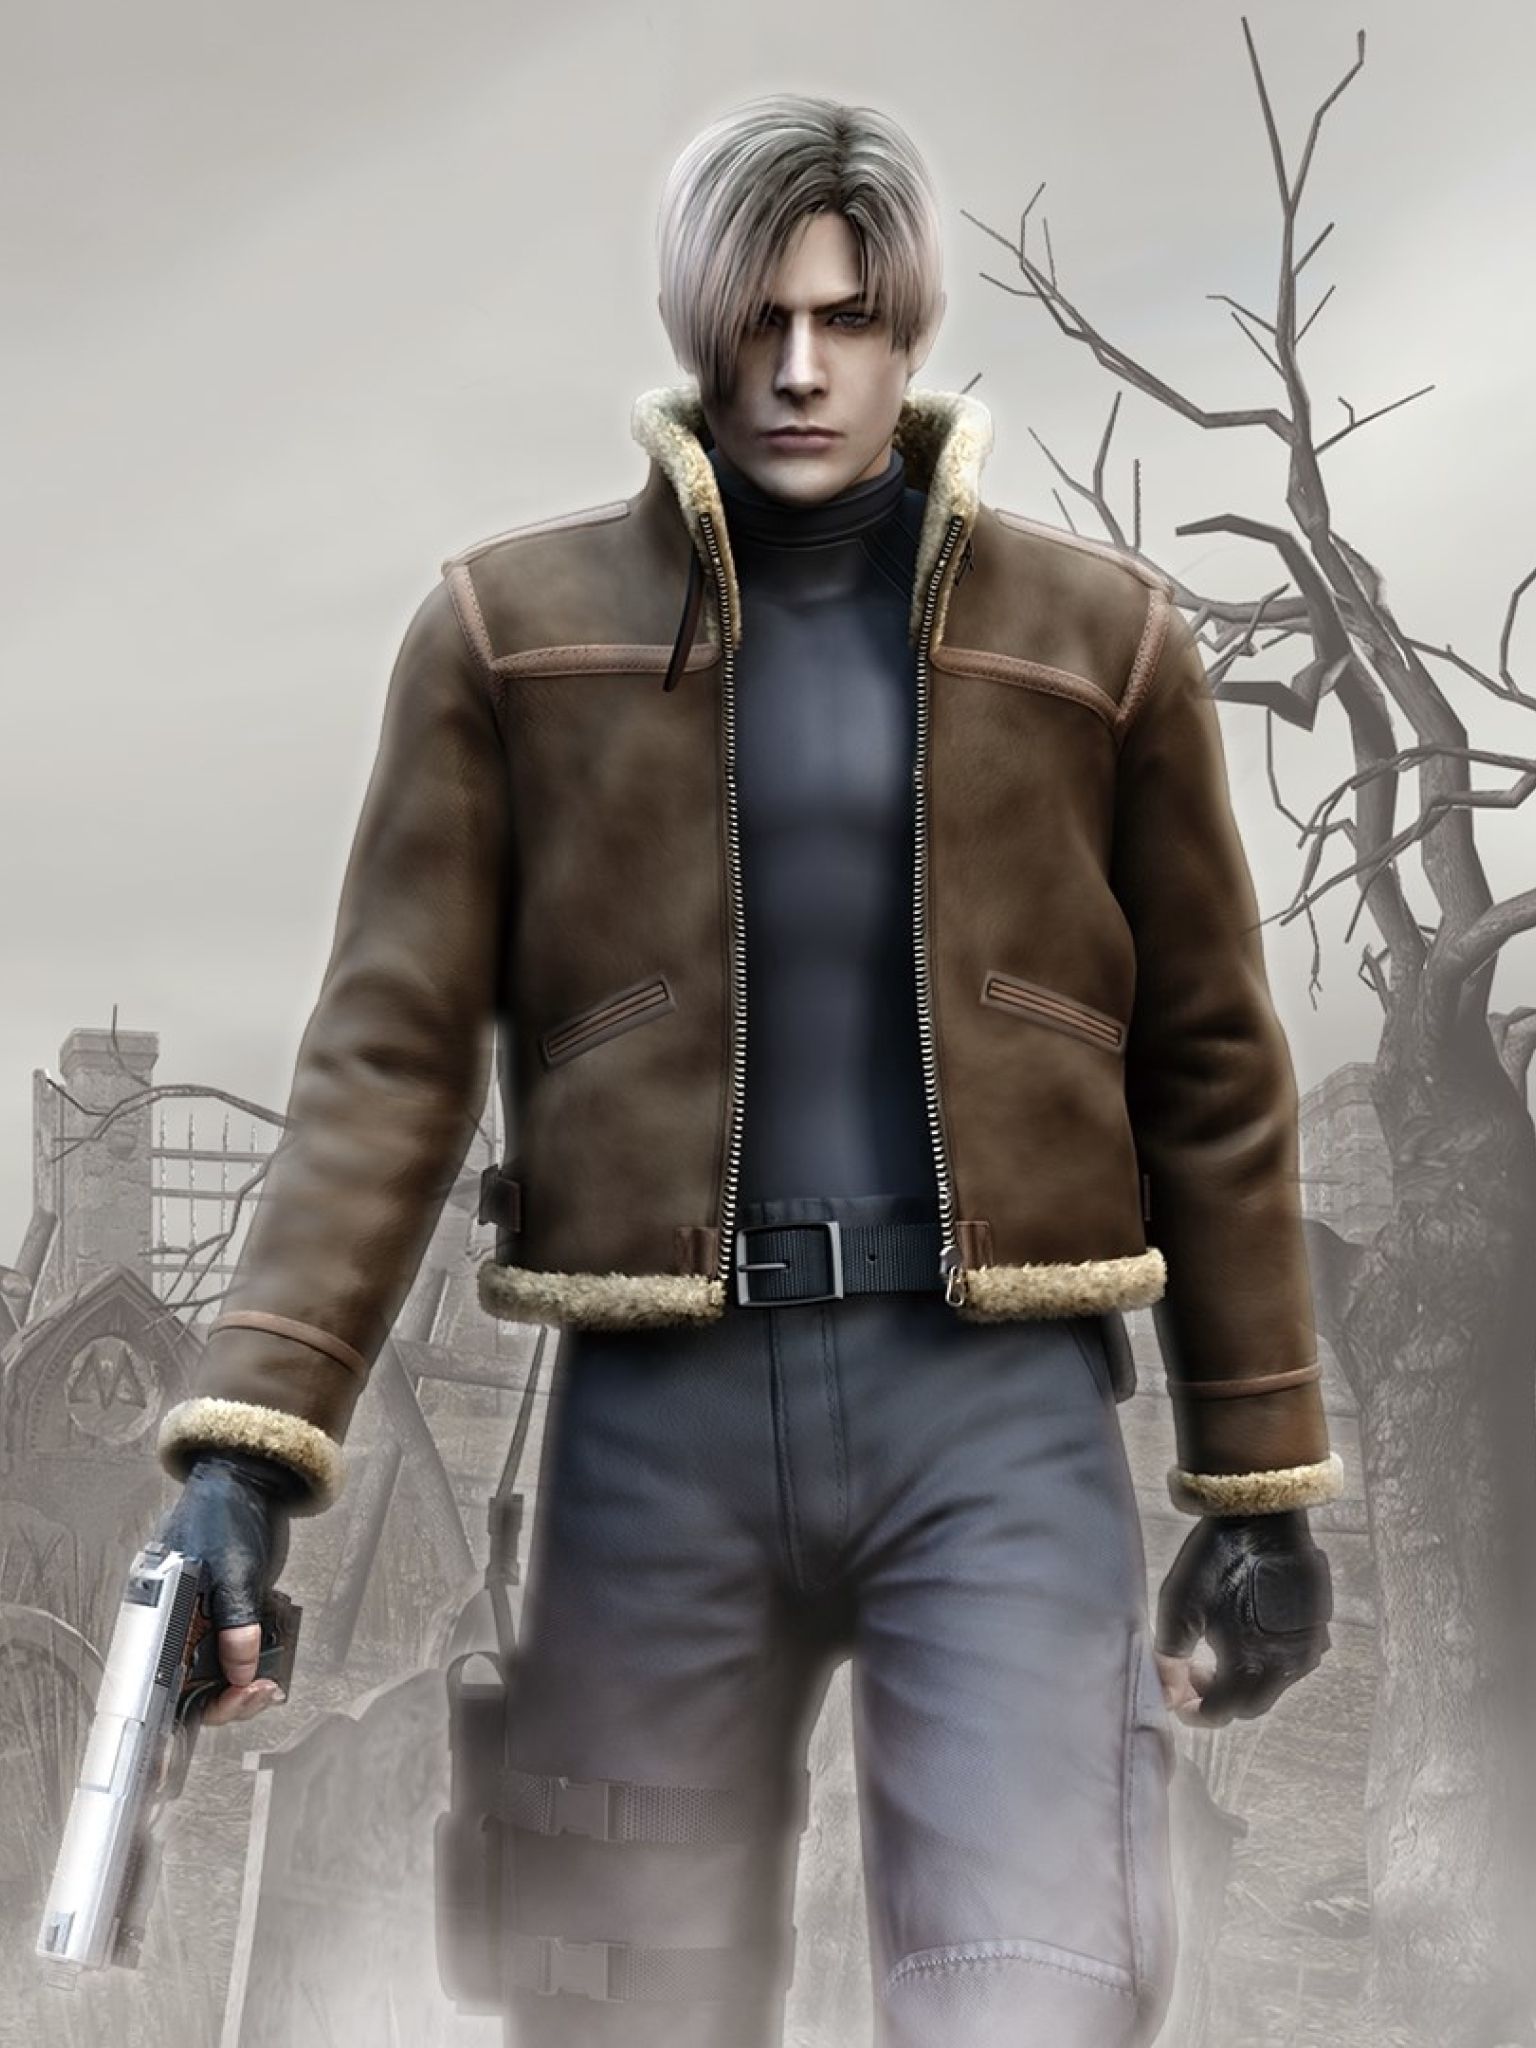 Resident Evil 4 Leon S. Kennedy 1536x2048 Resolution